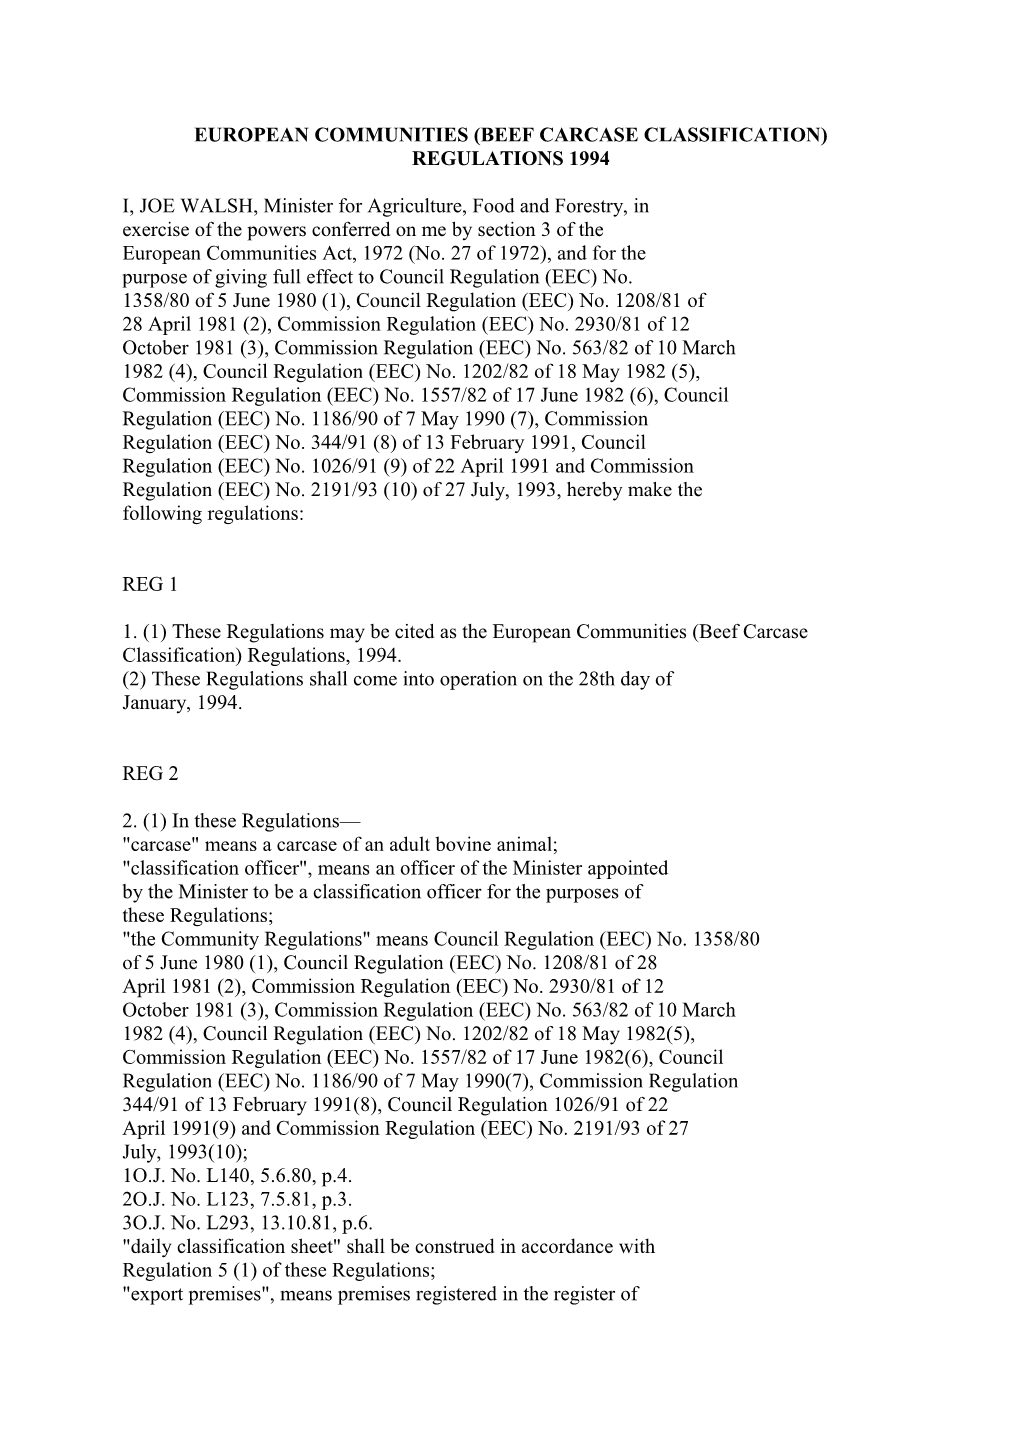 European Communities (Beef Carcase Classification) Regulations 1994